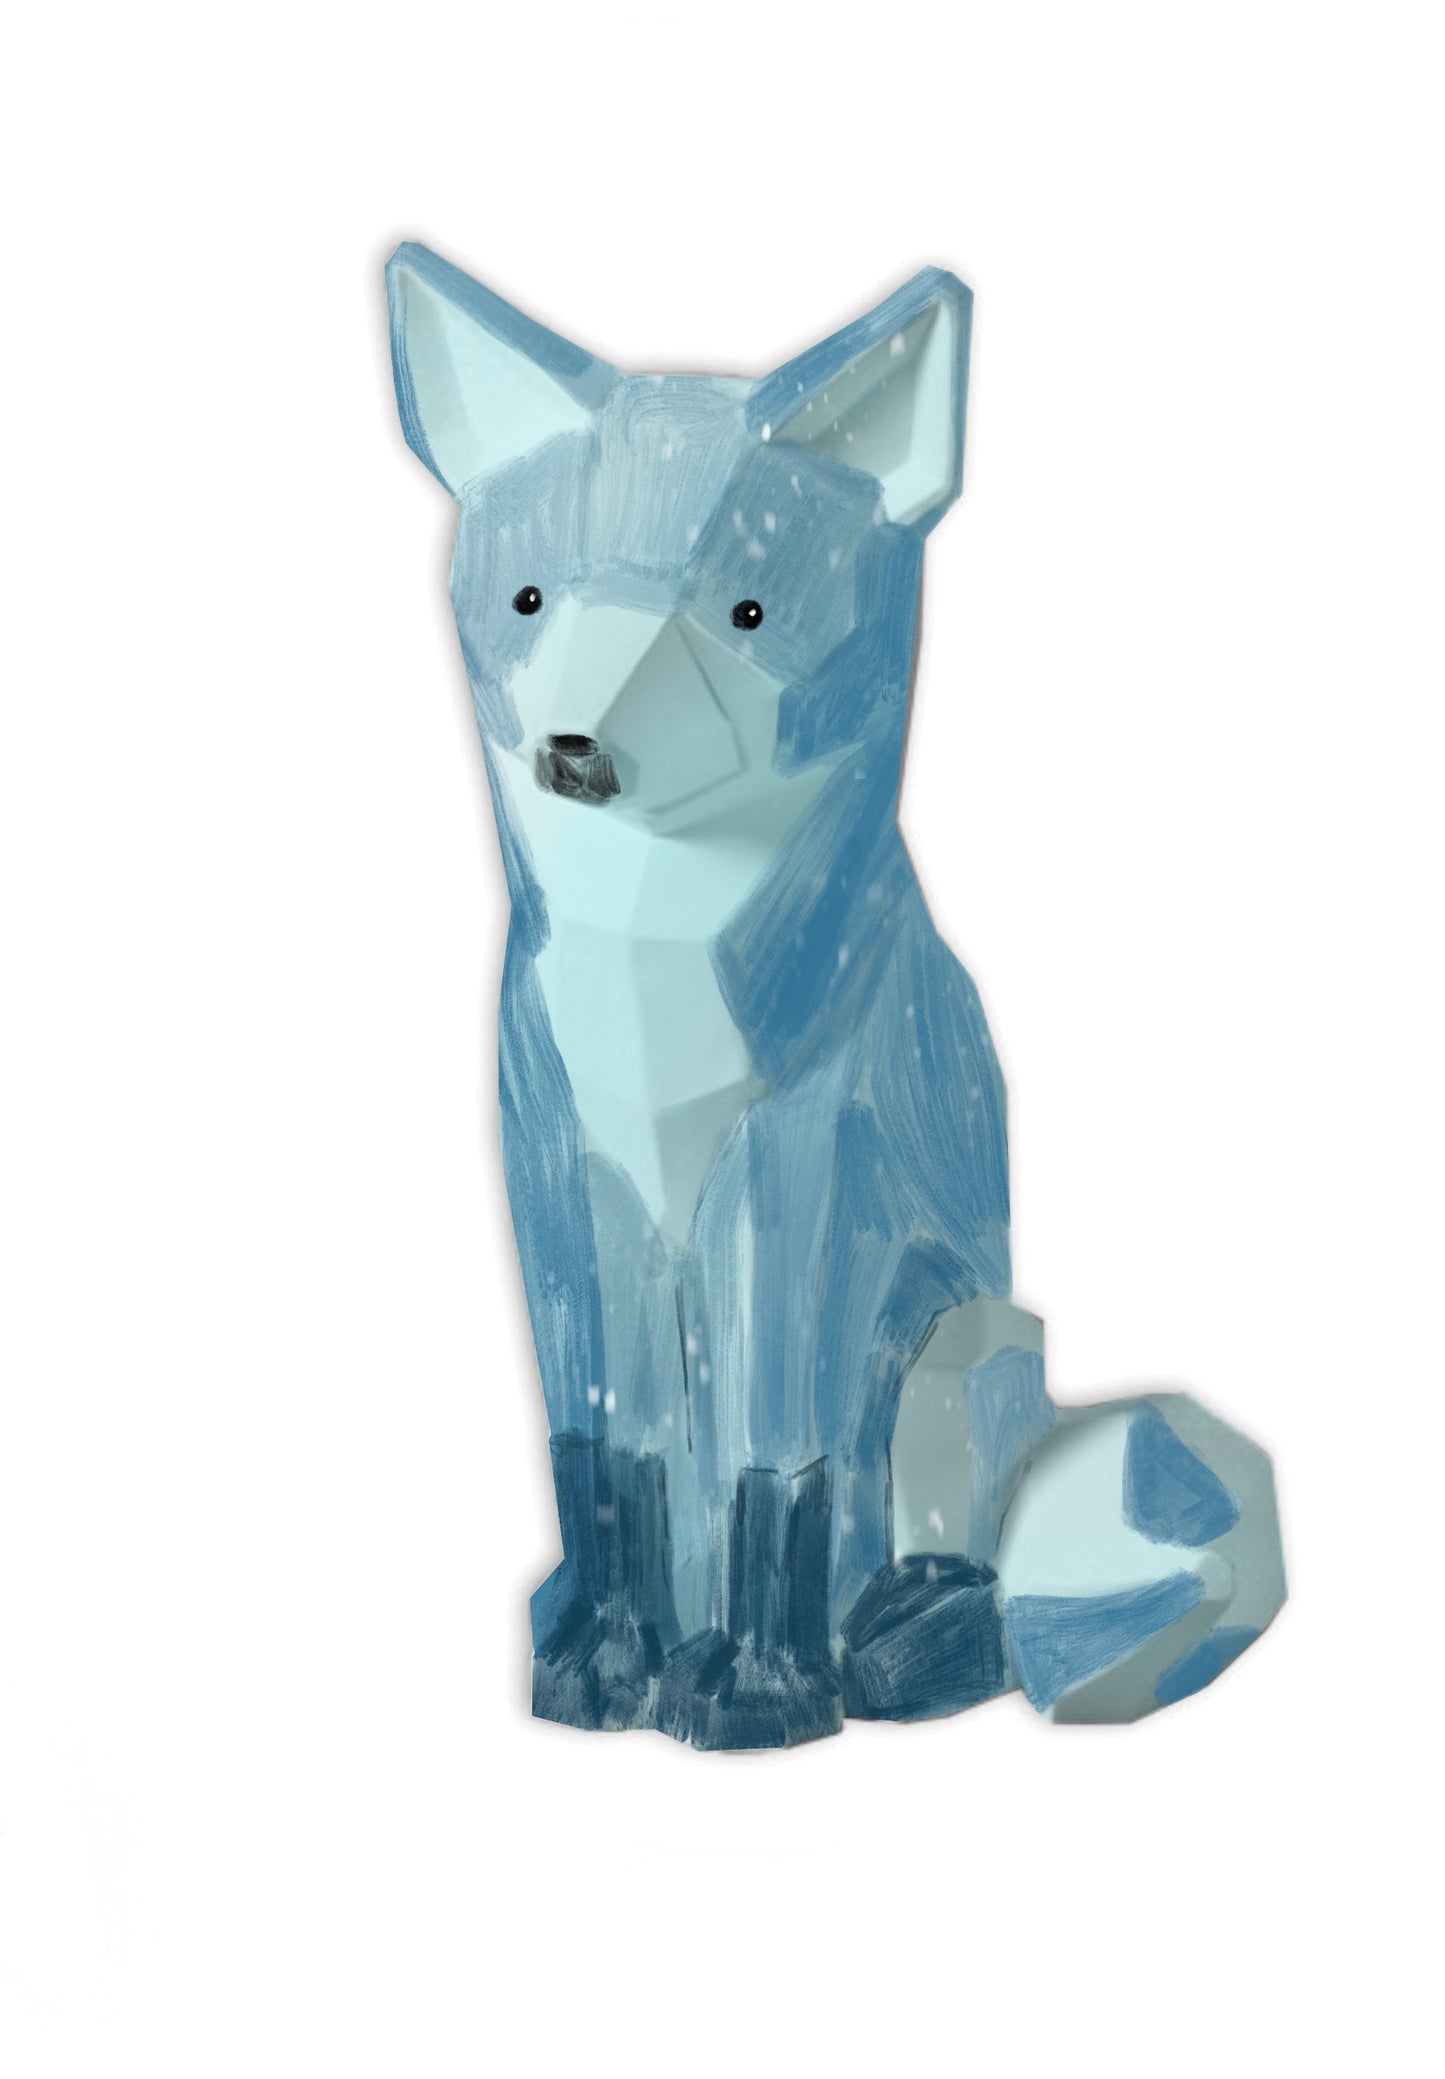 Fun Painting Ceramics - Winter Fox Figure!